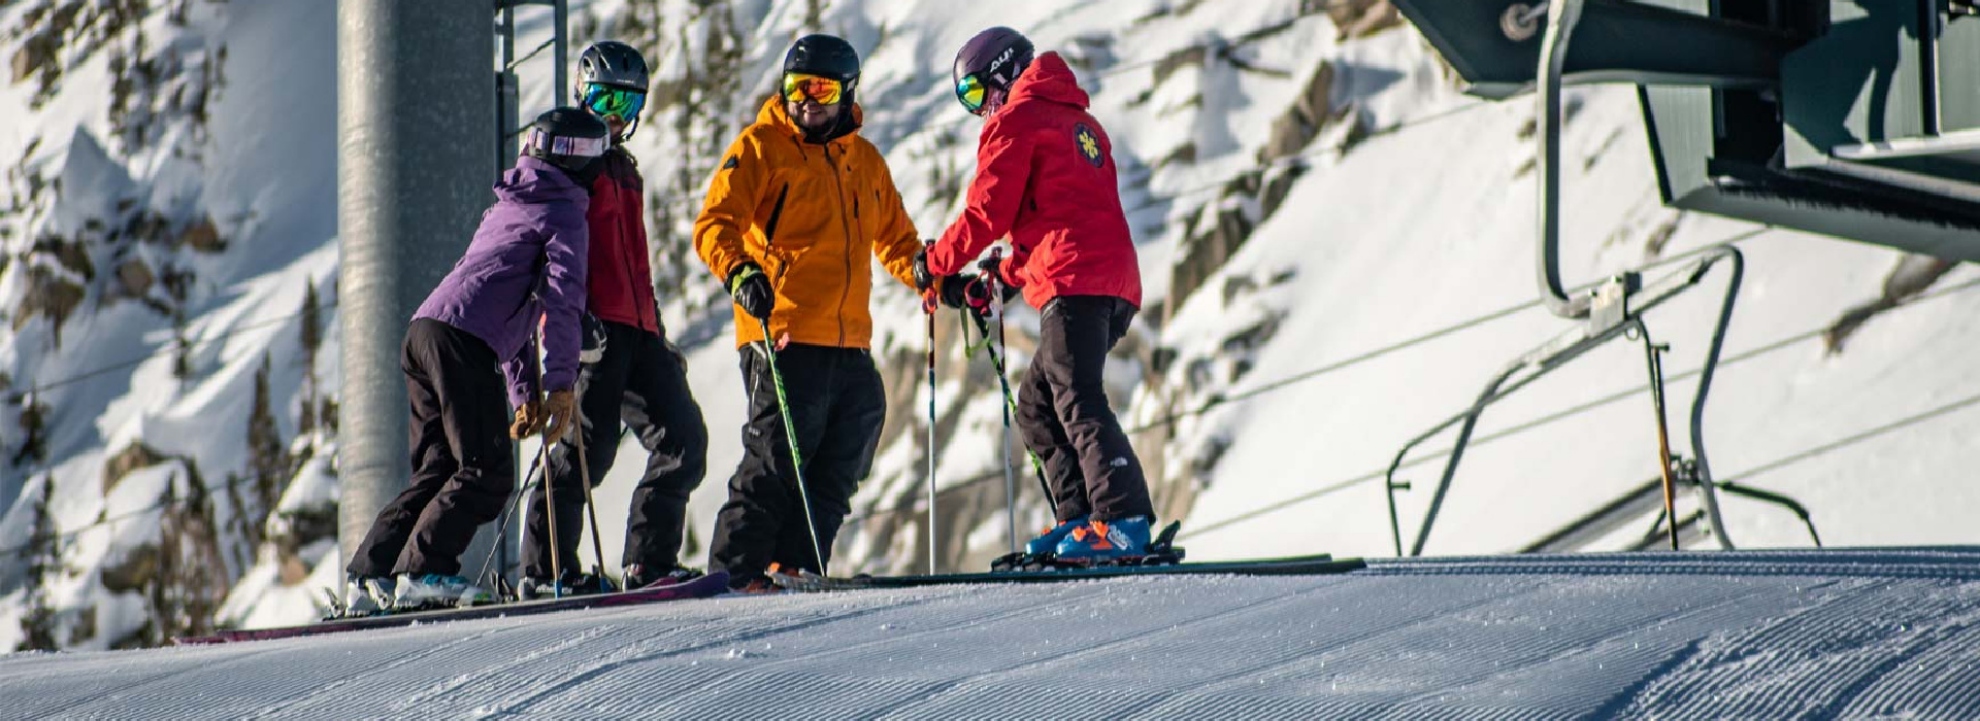 Skiers taking a lesson at Brighton Resort in Utah